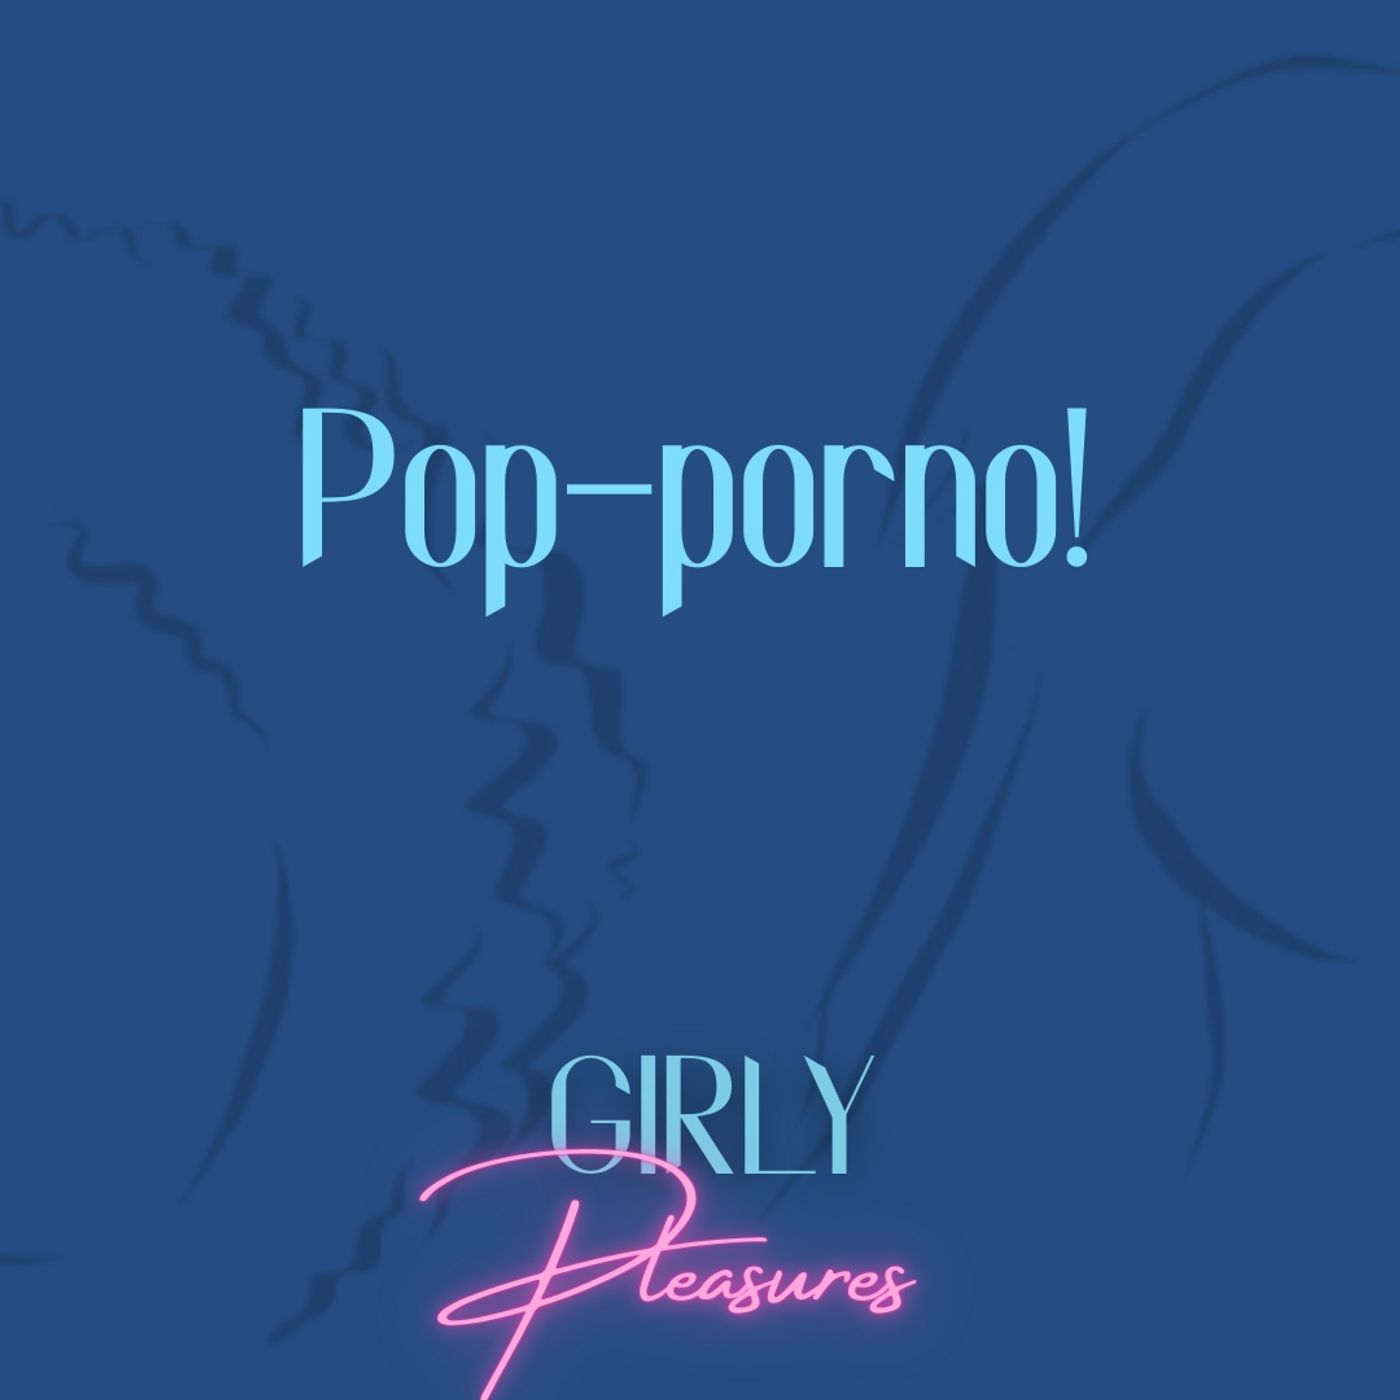 Ep. 14 - Pop-porno!